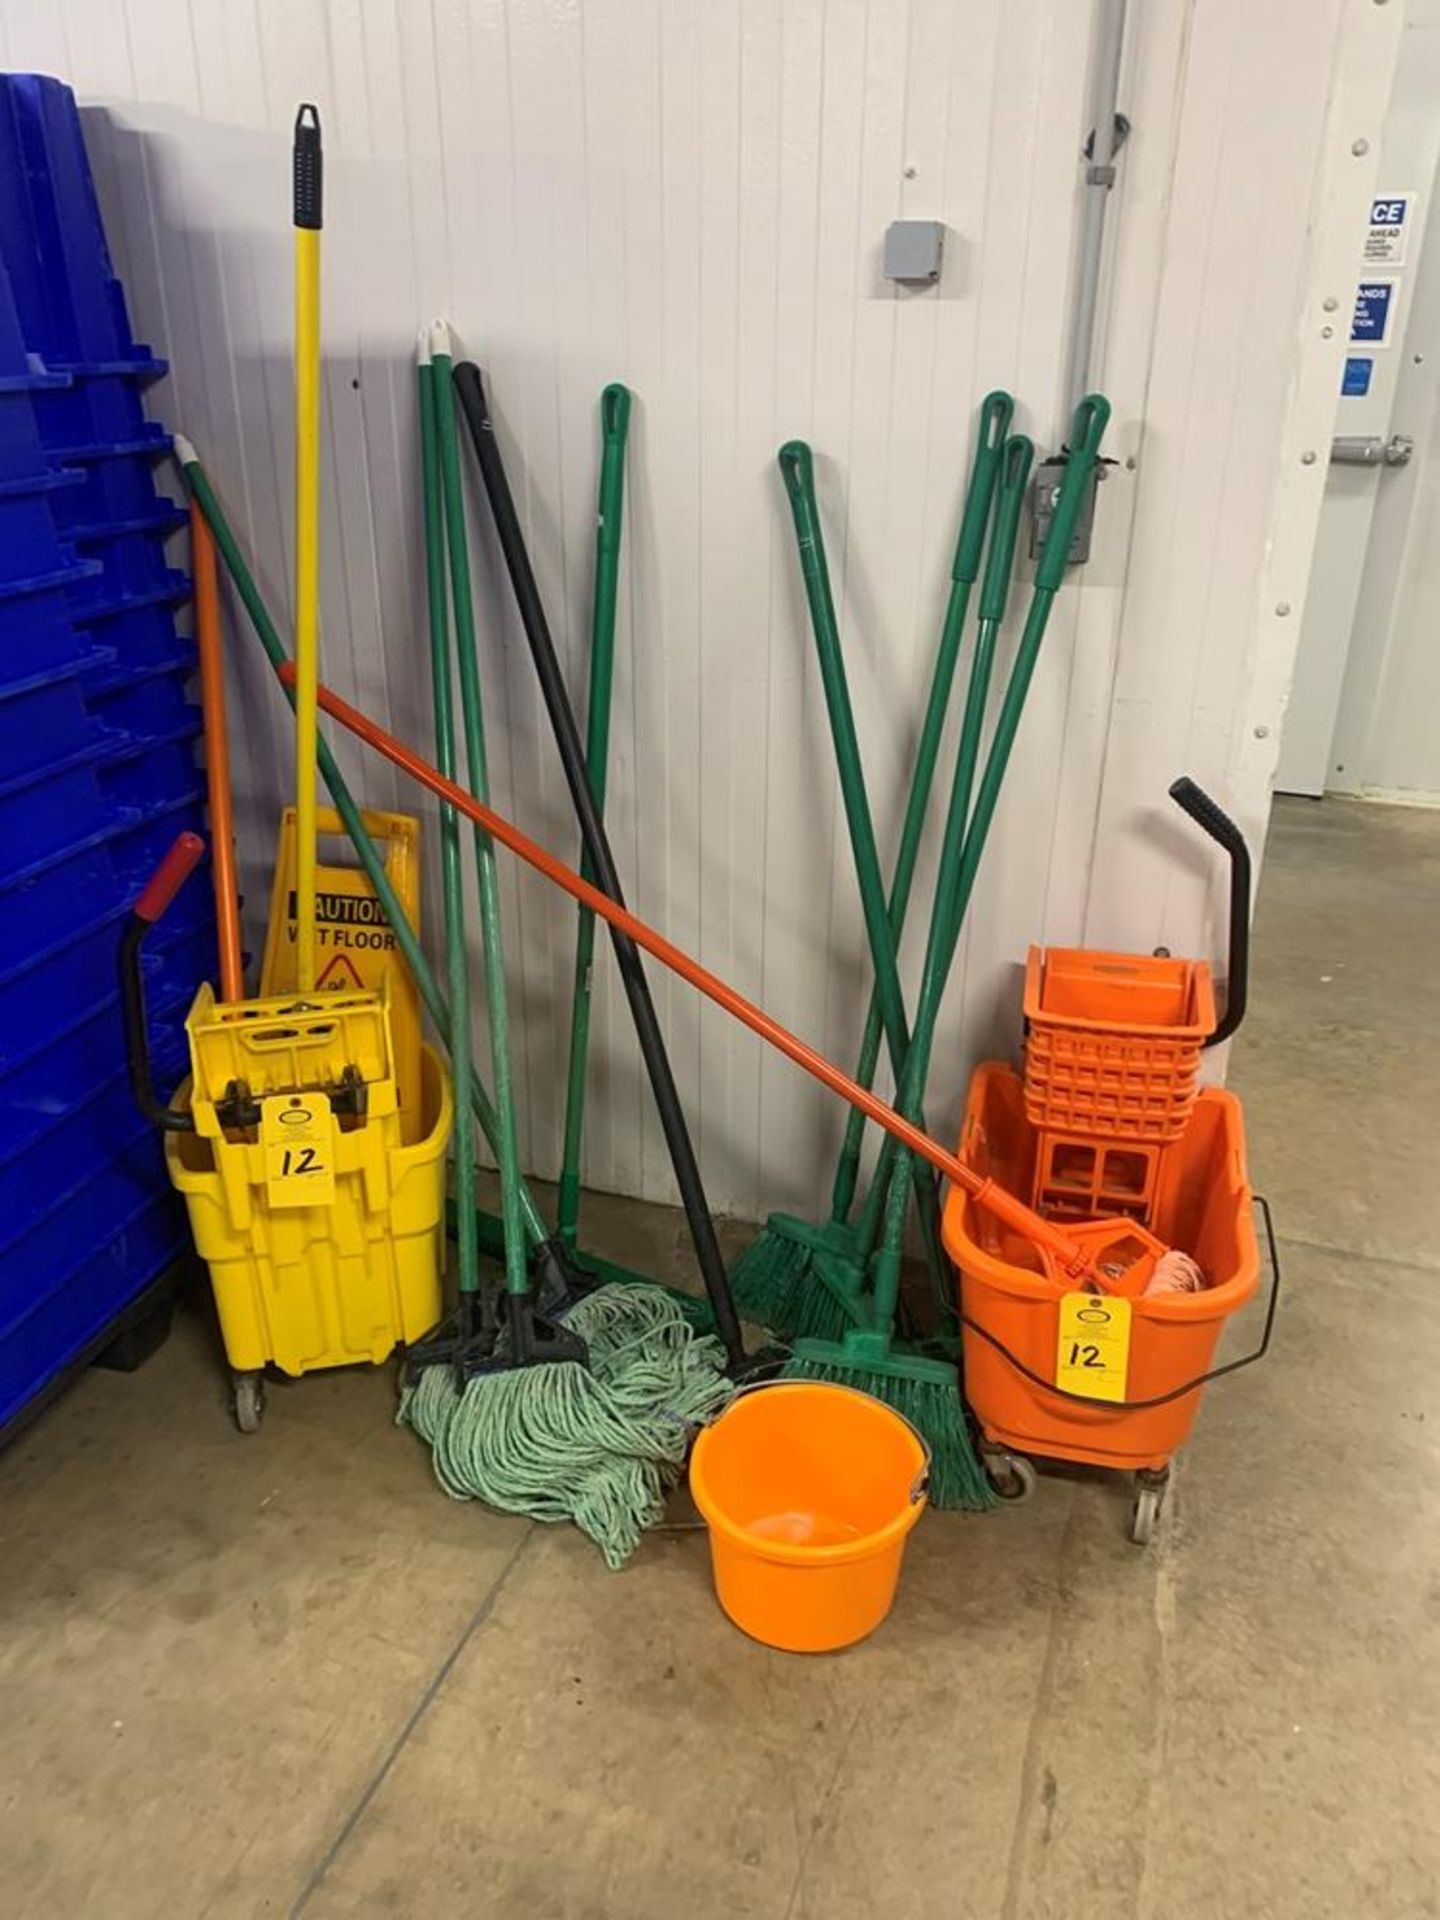 Lot (2) Mop Bucket, Mops and Brooms